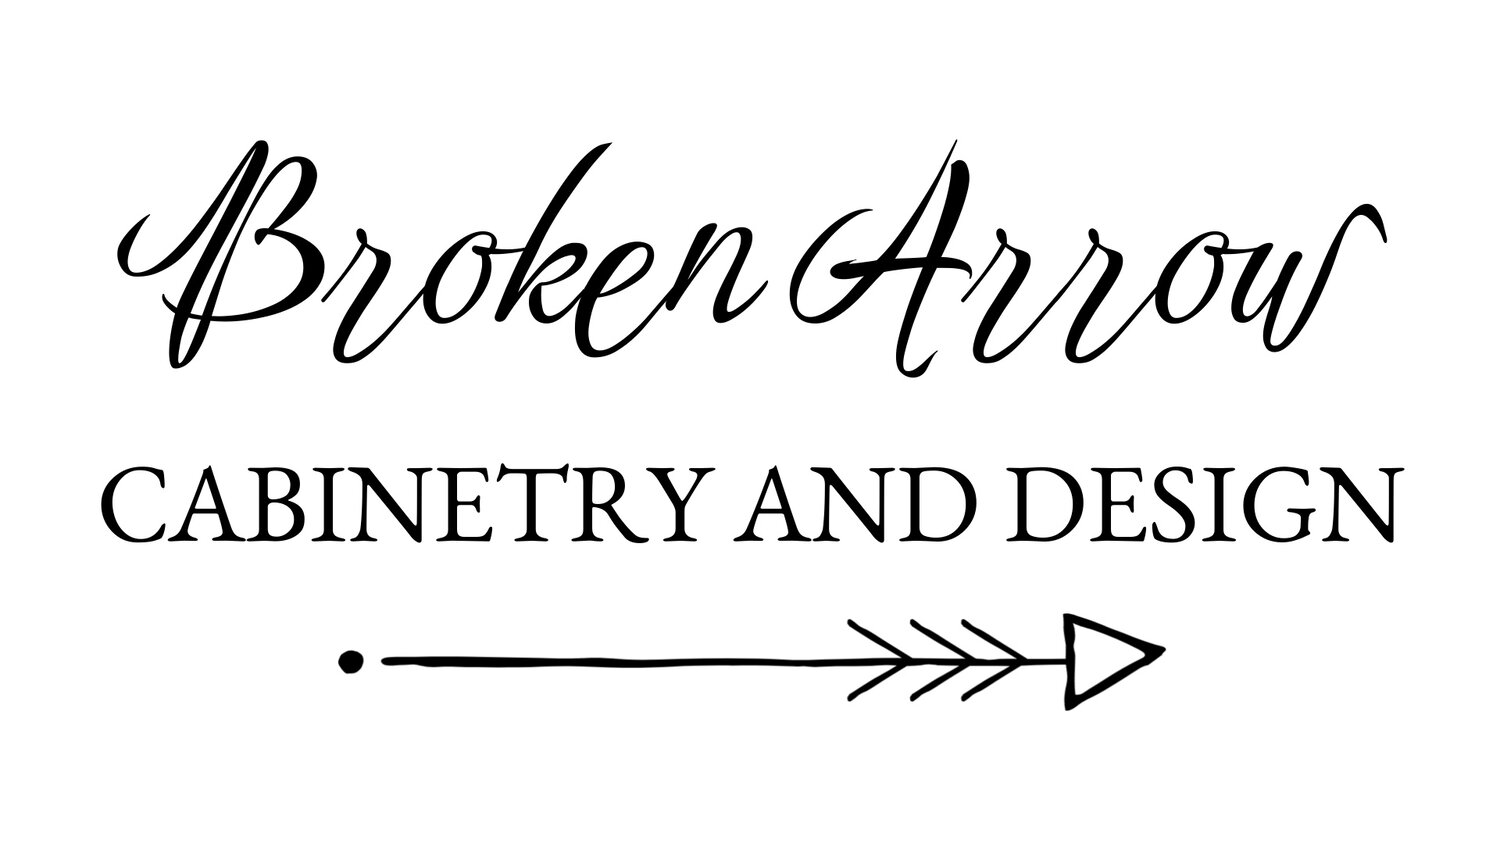 Broken Arrow Cabinetry and Design